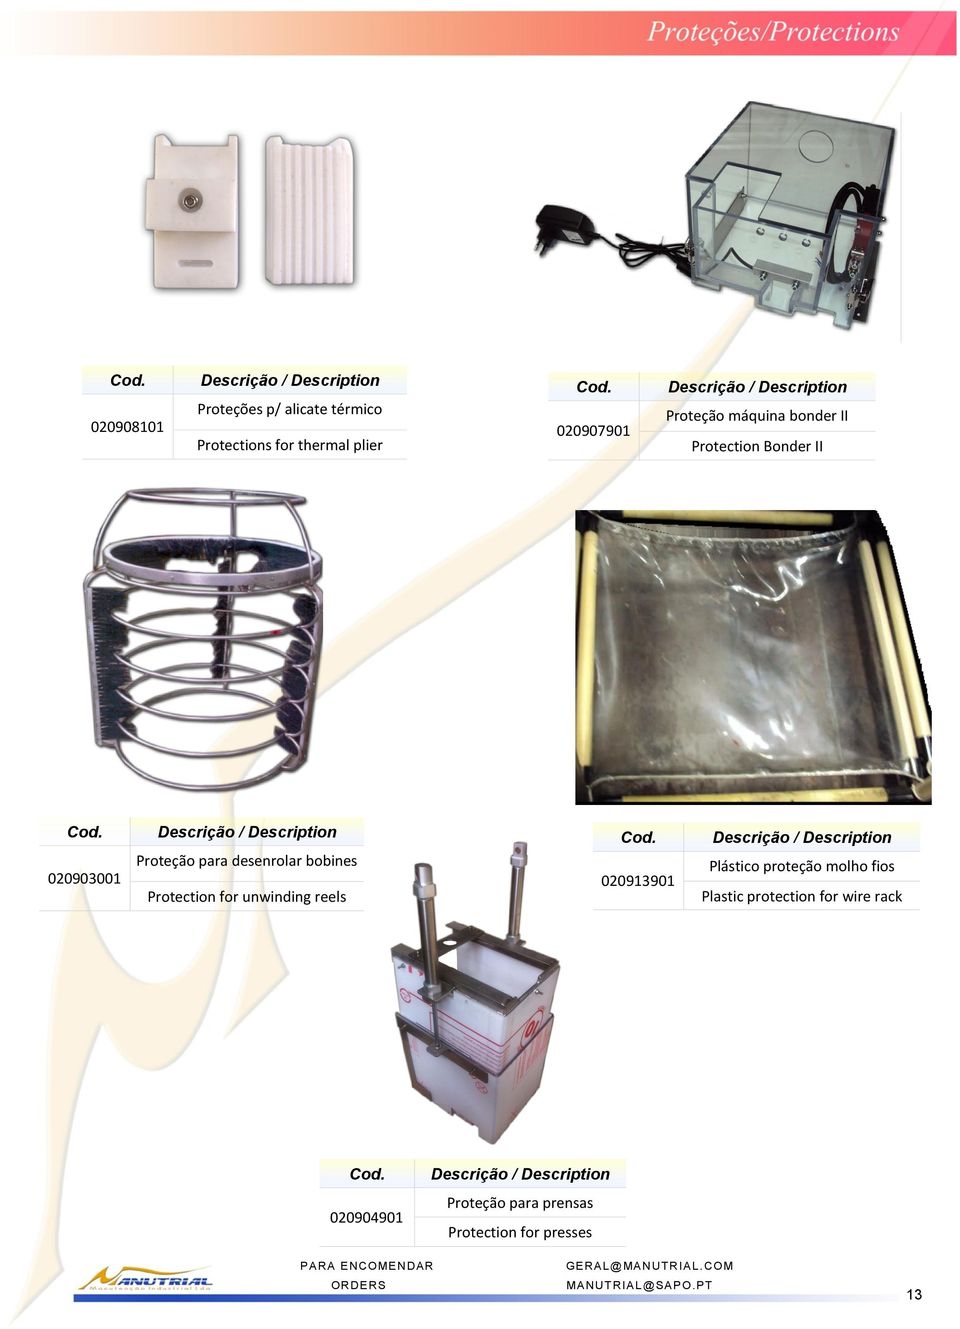 for unwinding reels 020913901 Plástico proteção molho fios Plastic protection for wire rack